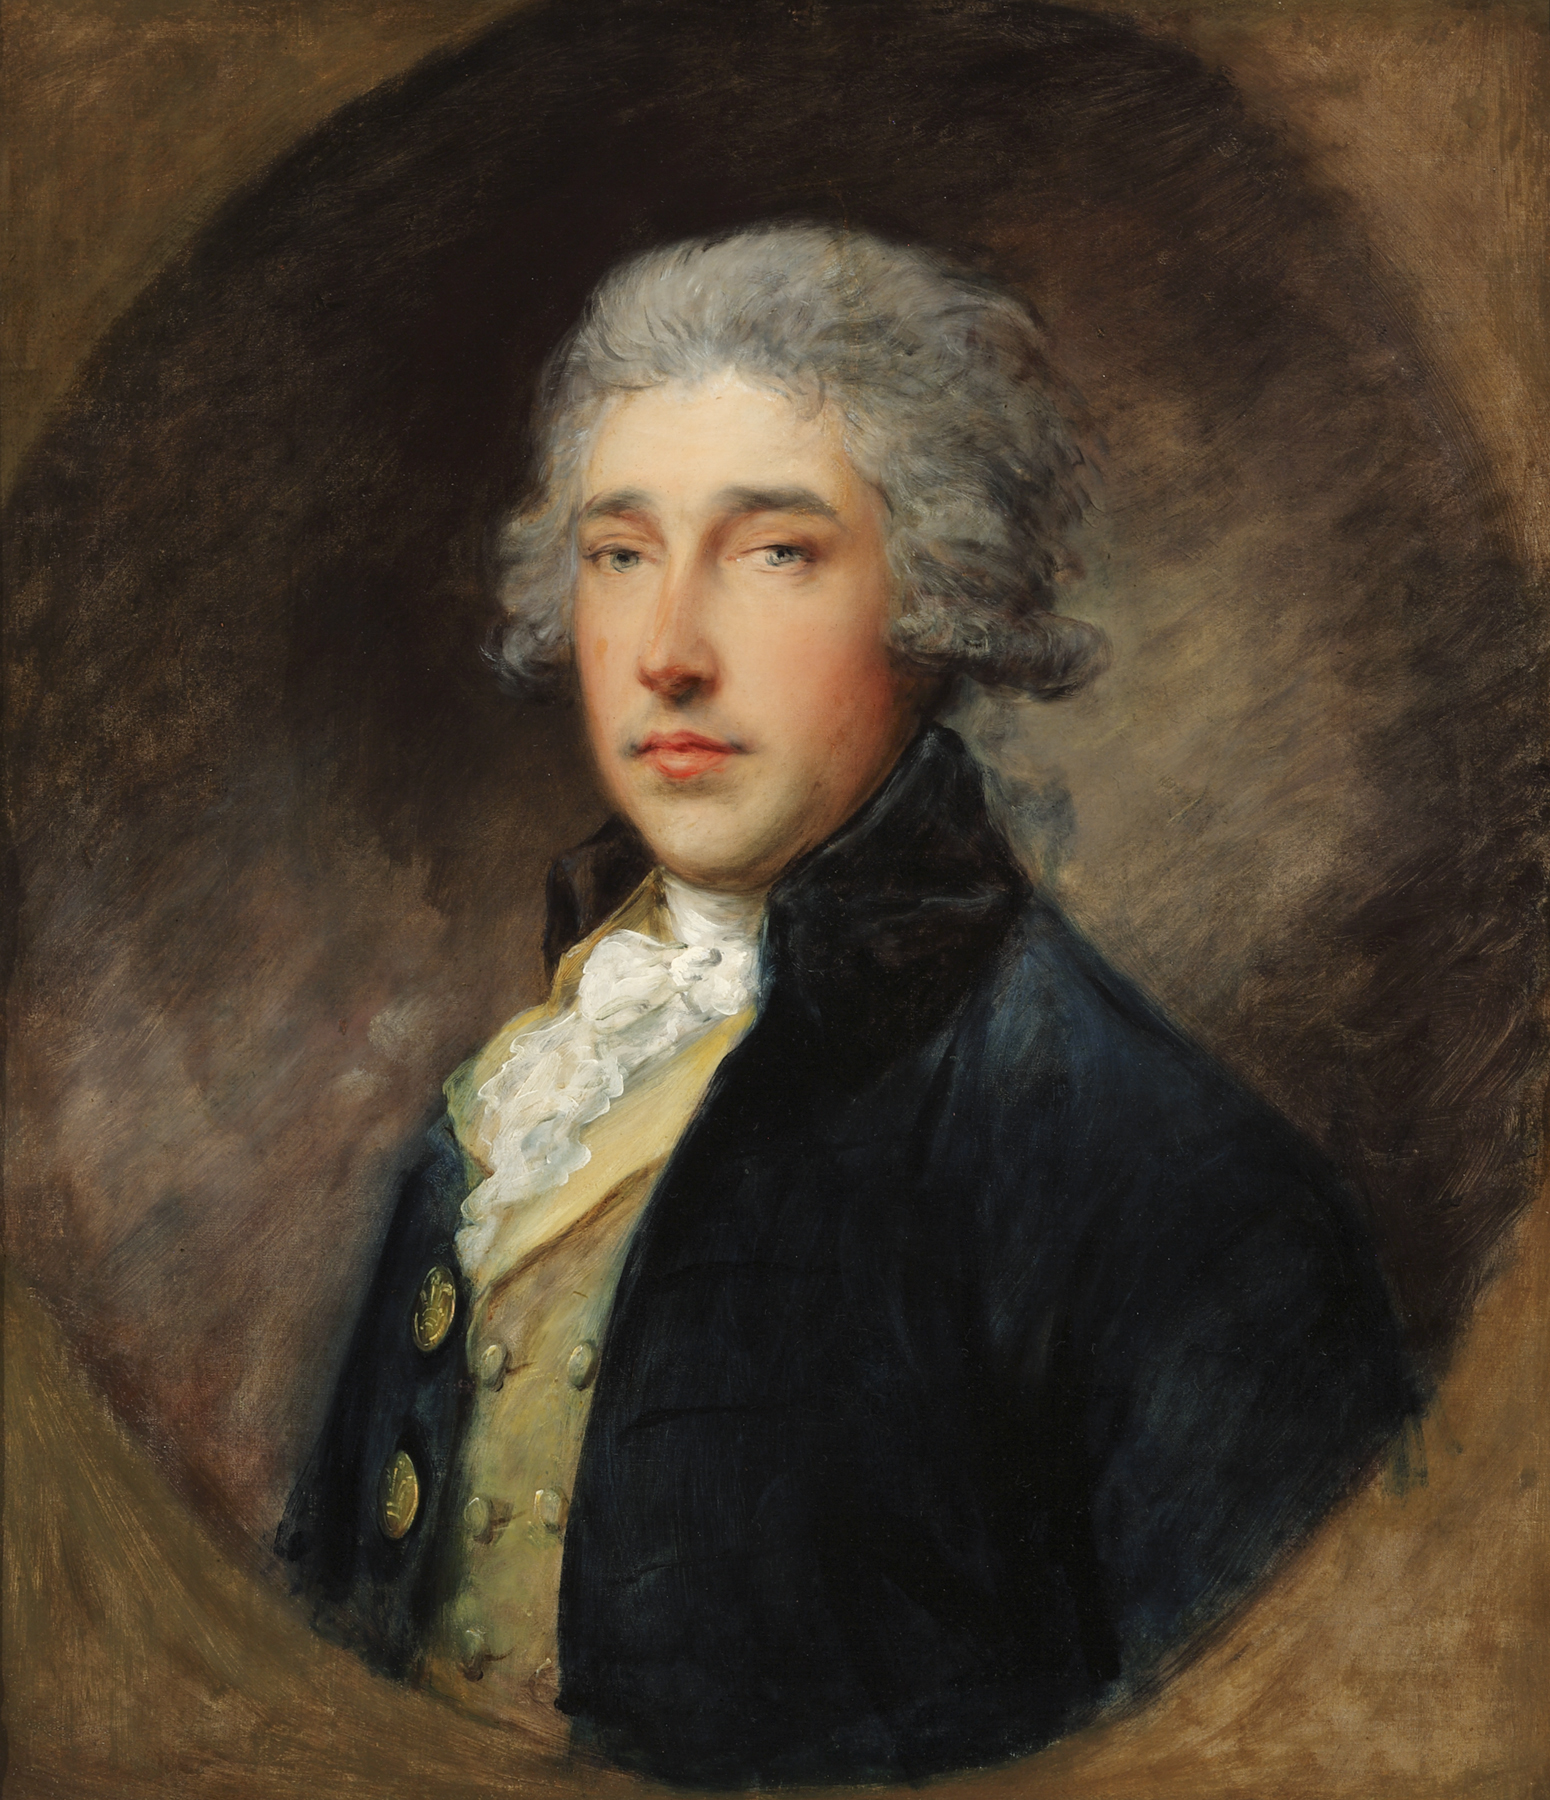 Here's lookin' at you: "Portrait of Sir Richard Brinsley Sheridan" by Gainsborough, circa 1785.